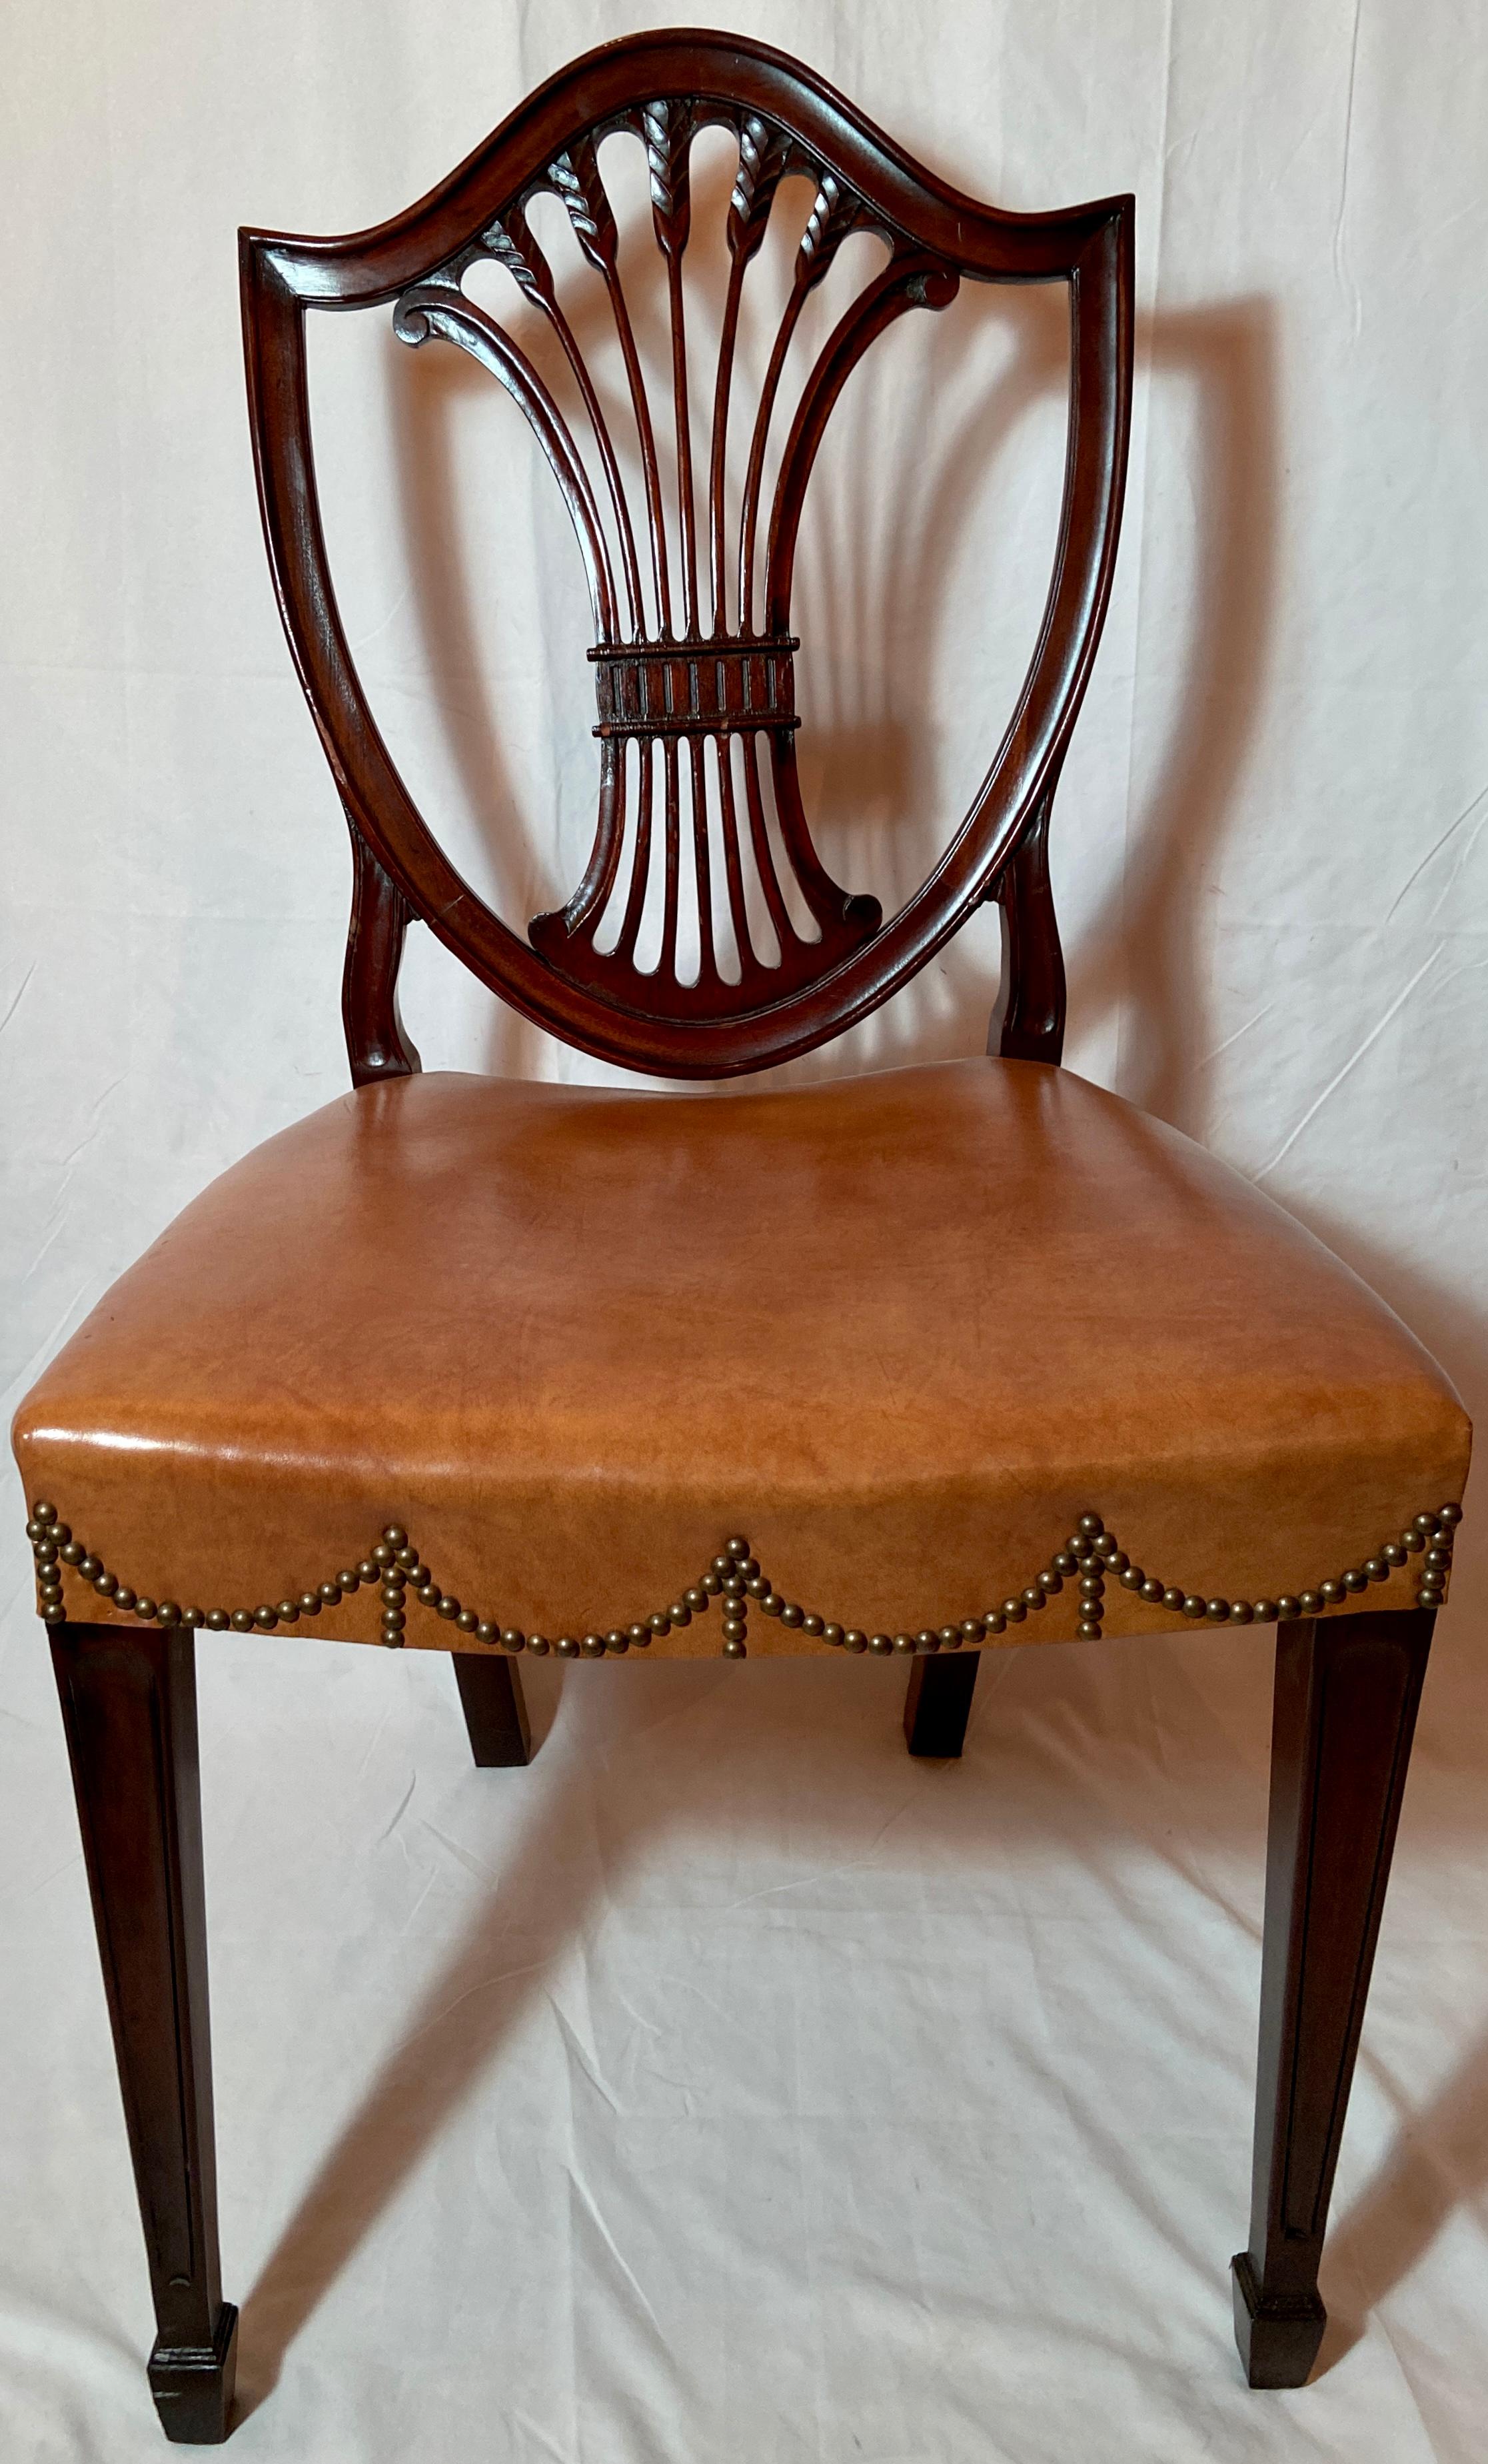 20th Century Set of 10 English Mahogany Hepplewhite Shield-Back Dining Chairs, Circa 1940-50